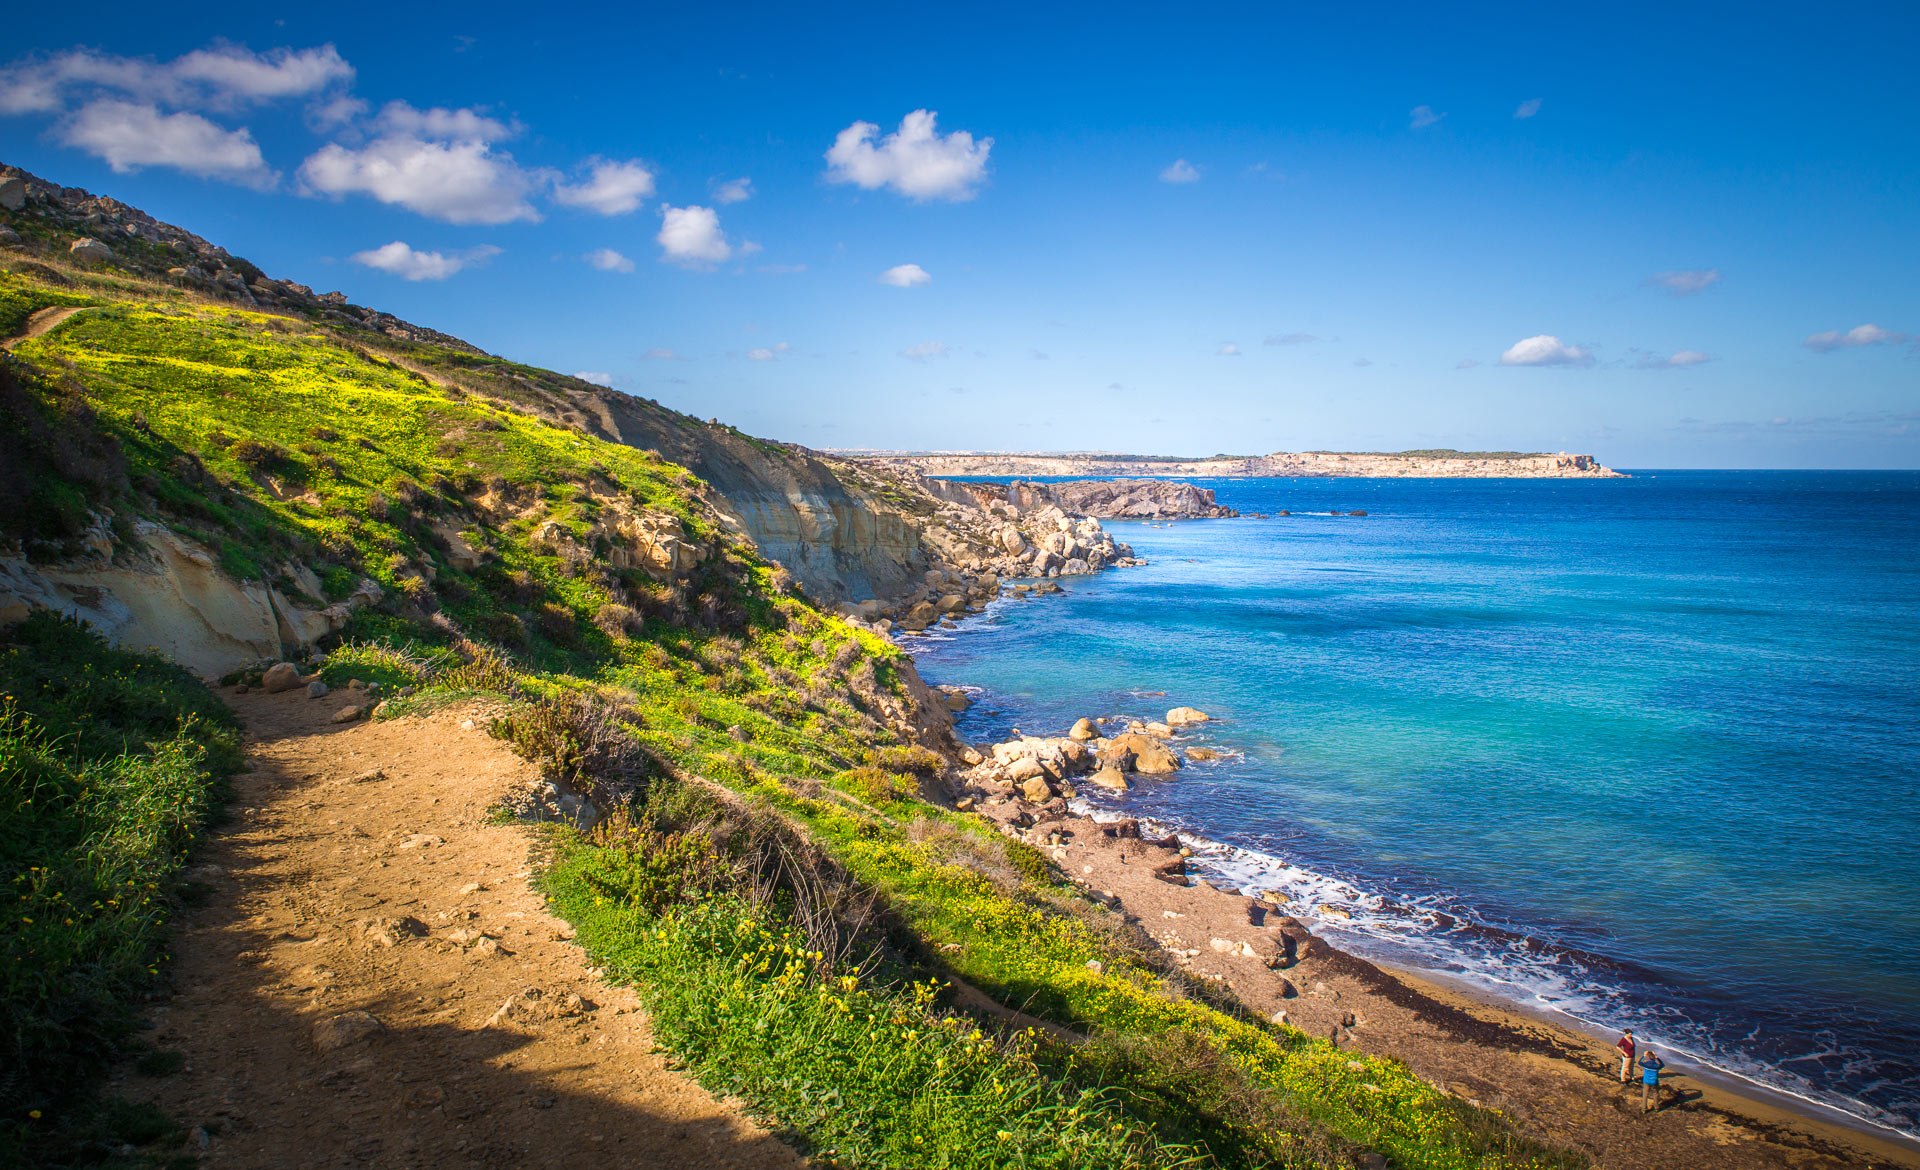 Beach of Bajia ta 'Mgiebah Malta - best Malta beaches